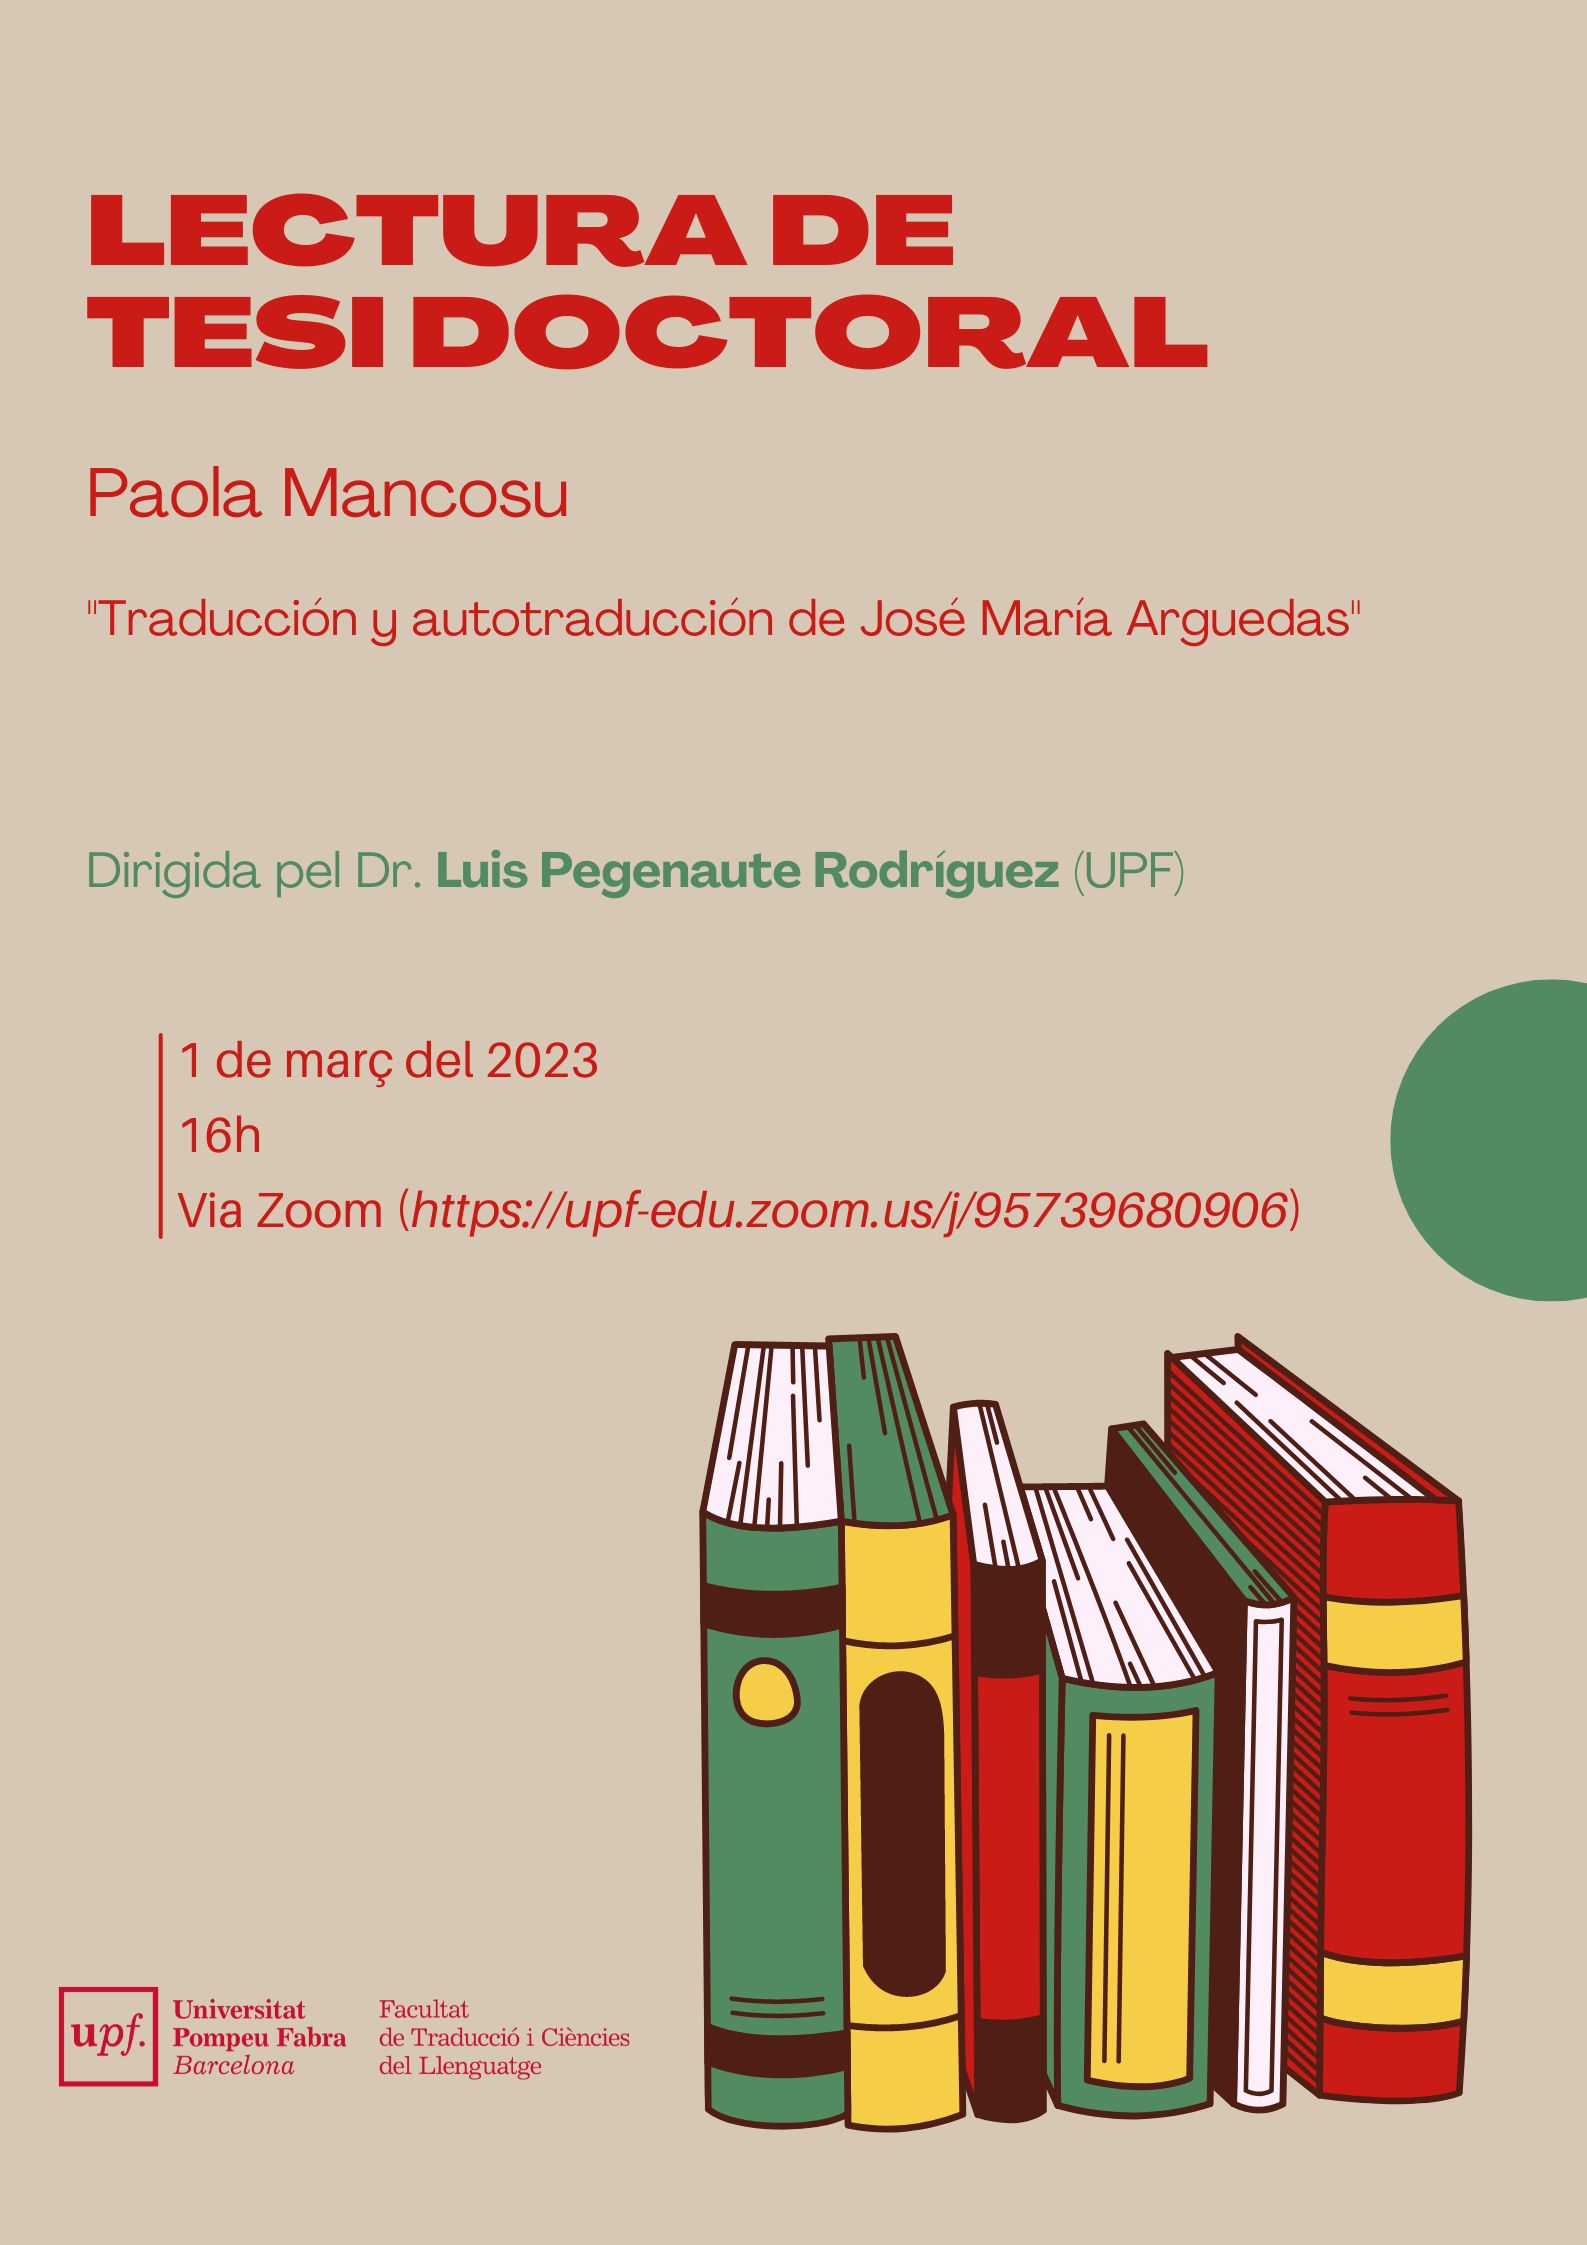 01/03/2023 Lectura de la tesi doctoral de Paola Mancosu, a les 16.00 hores